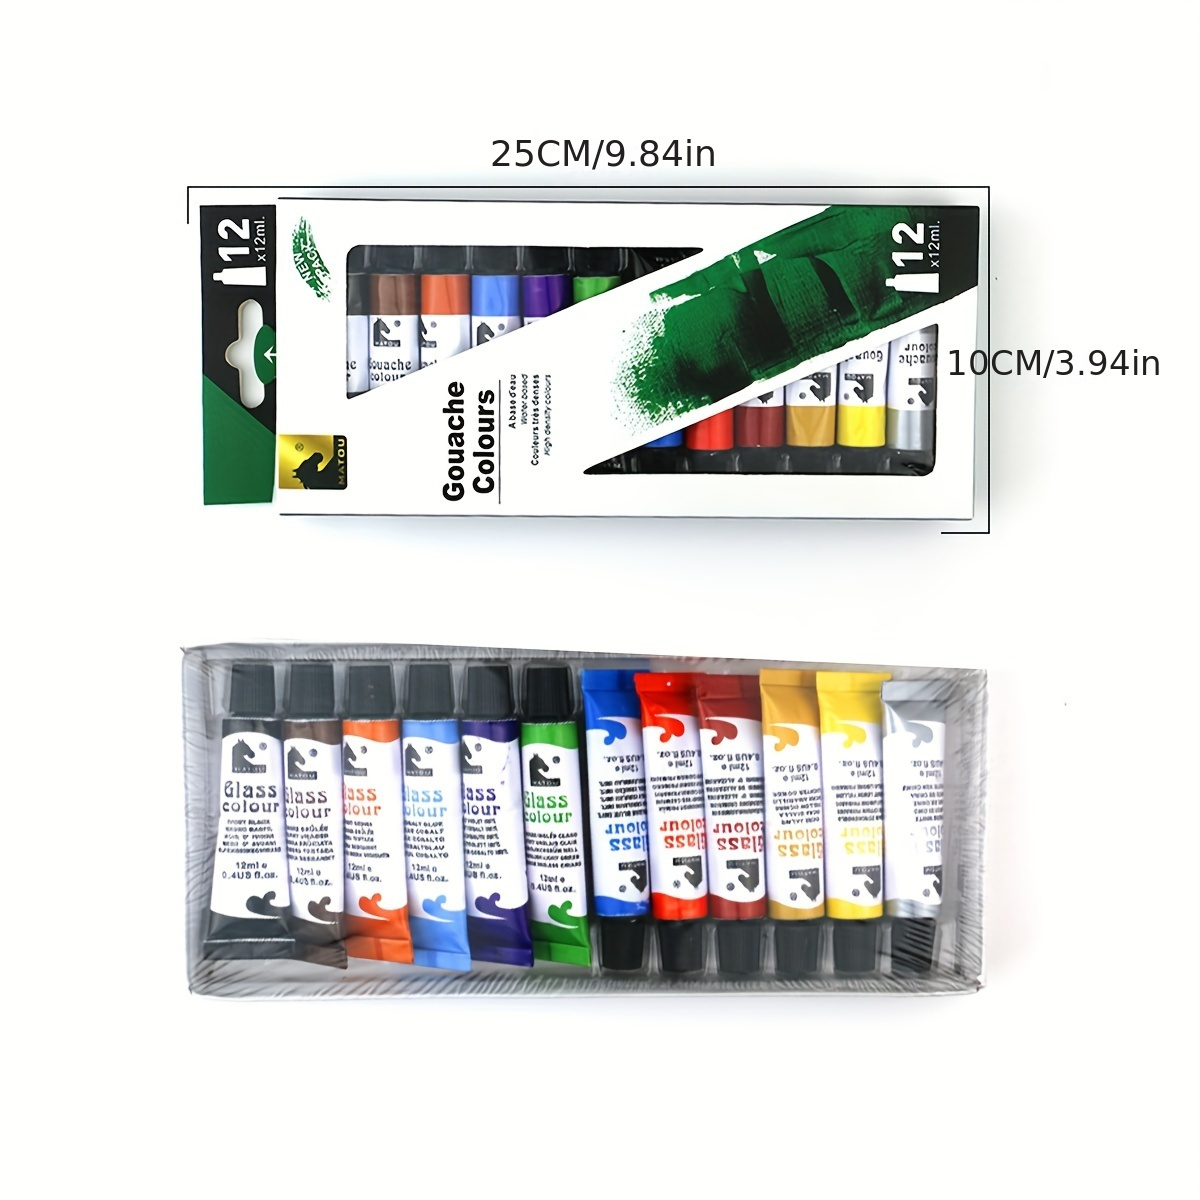 12 Colors/set of DIY Art Painting Paint Professional Acrylic Paint